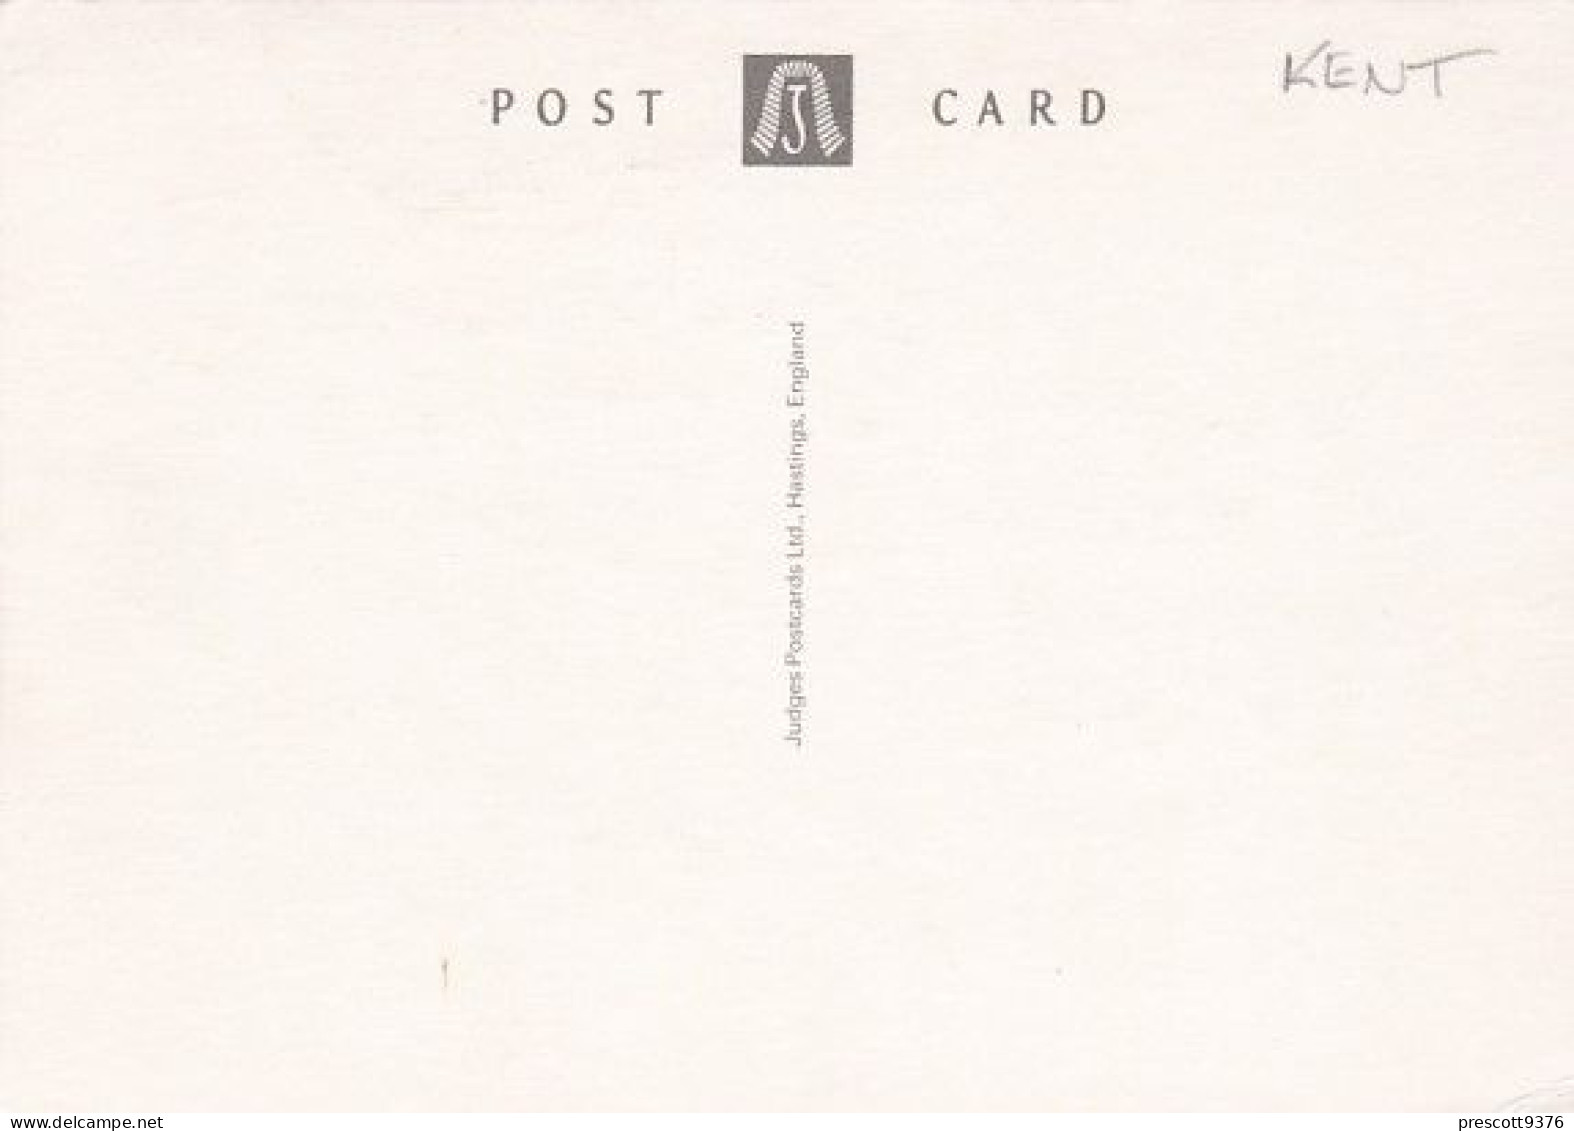 The Pantilles, Royal Tunbridge Wells - Kent - , UK   -   Unused Postcard   - K1 - Dover